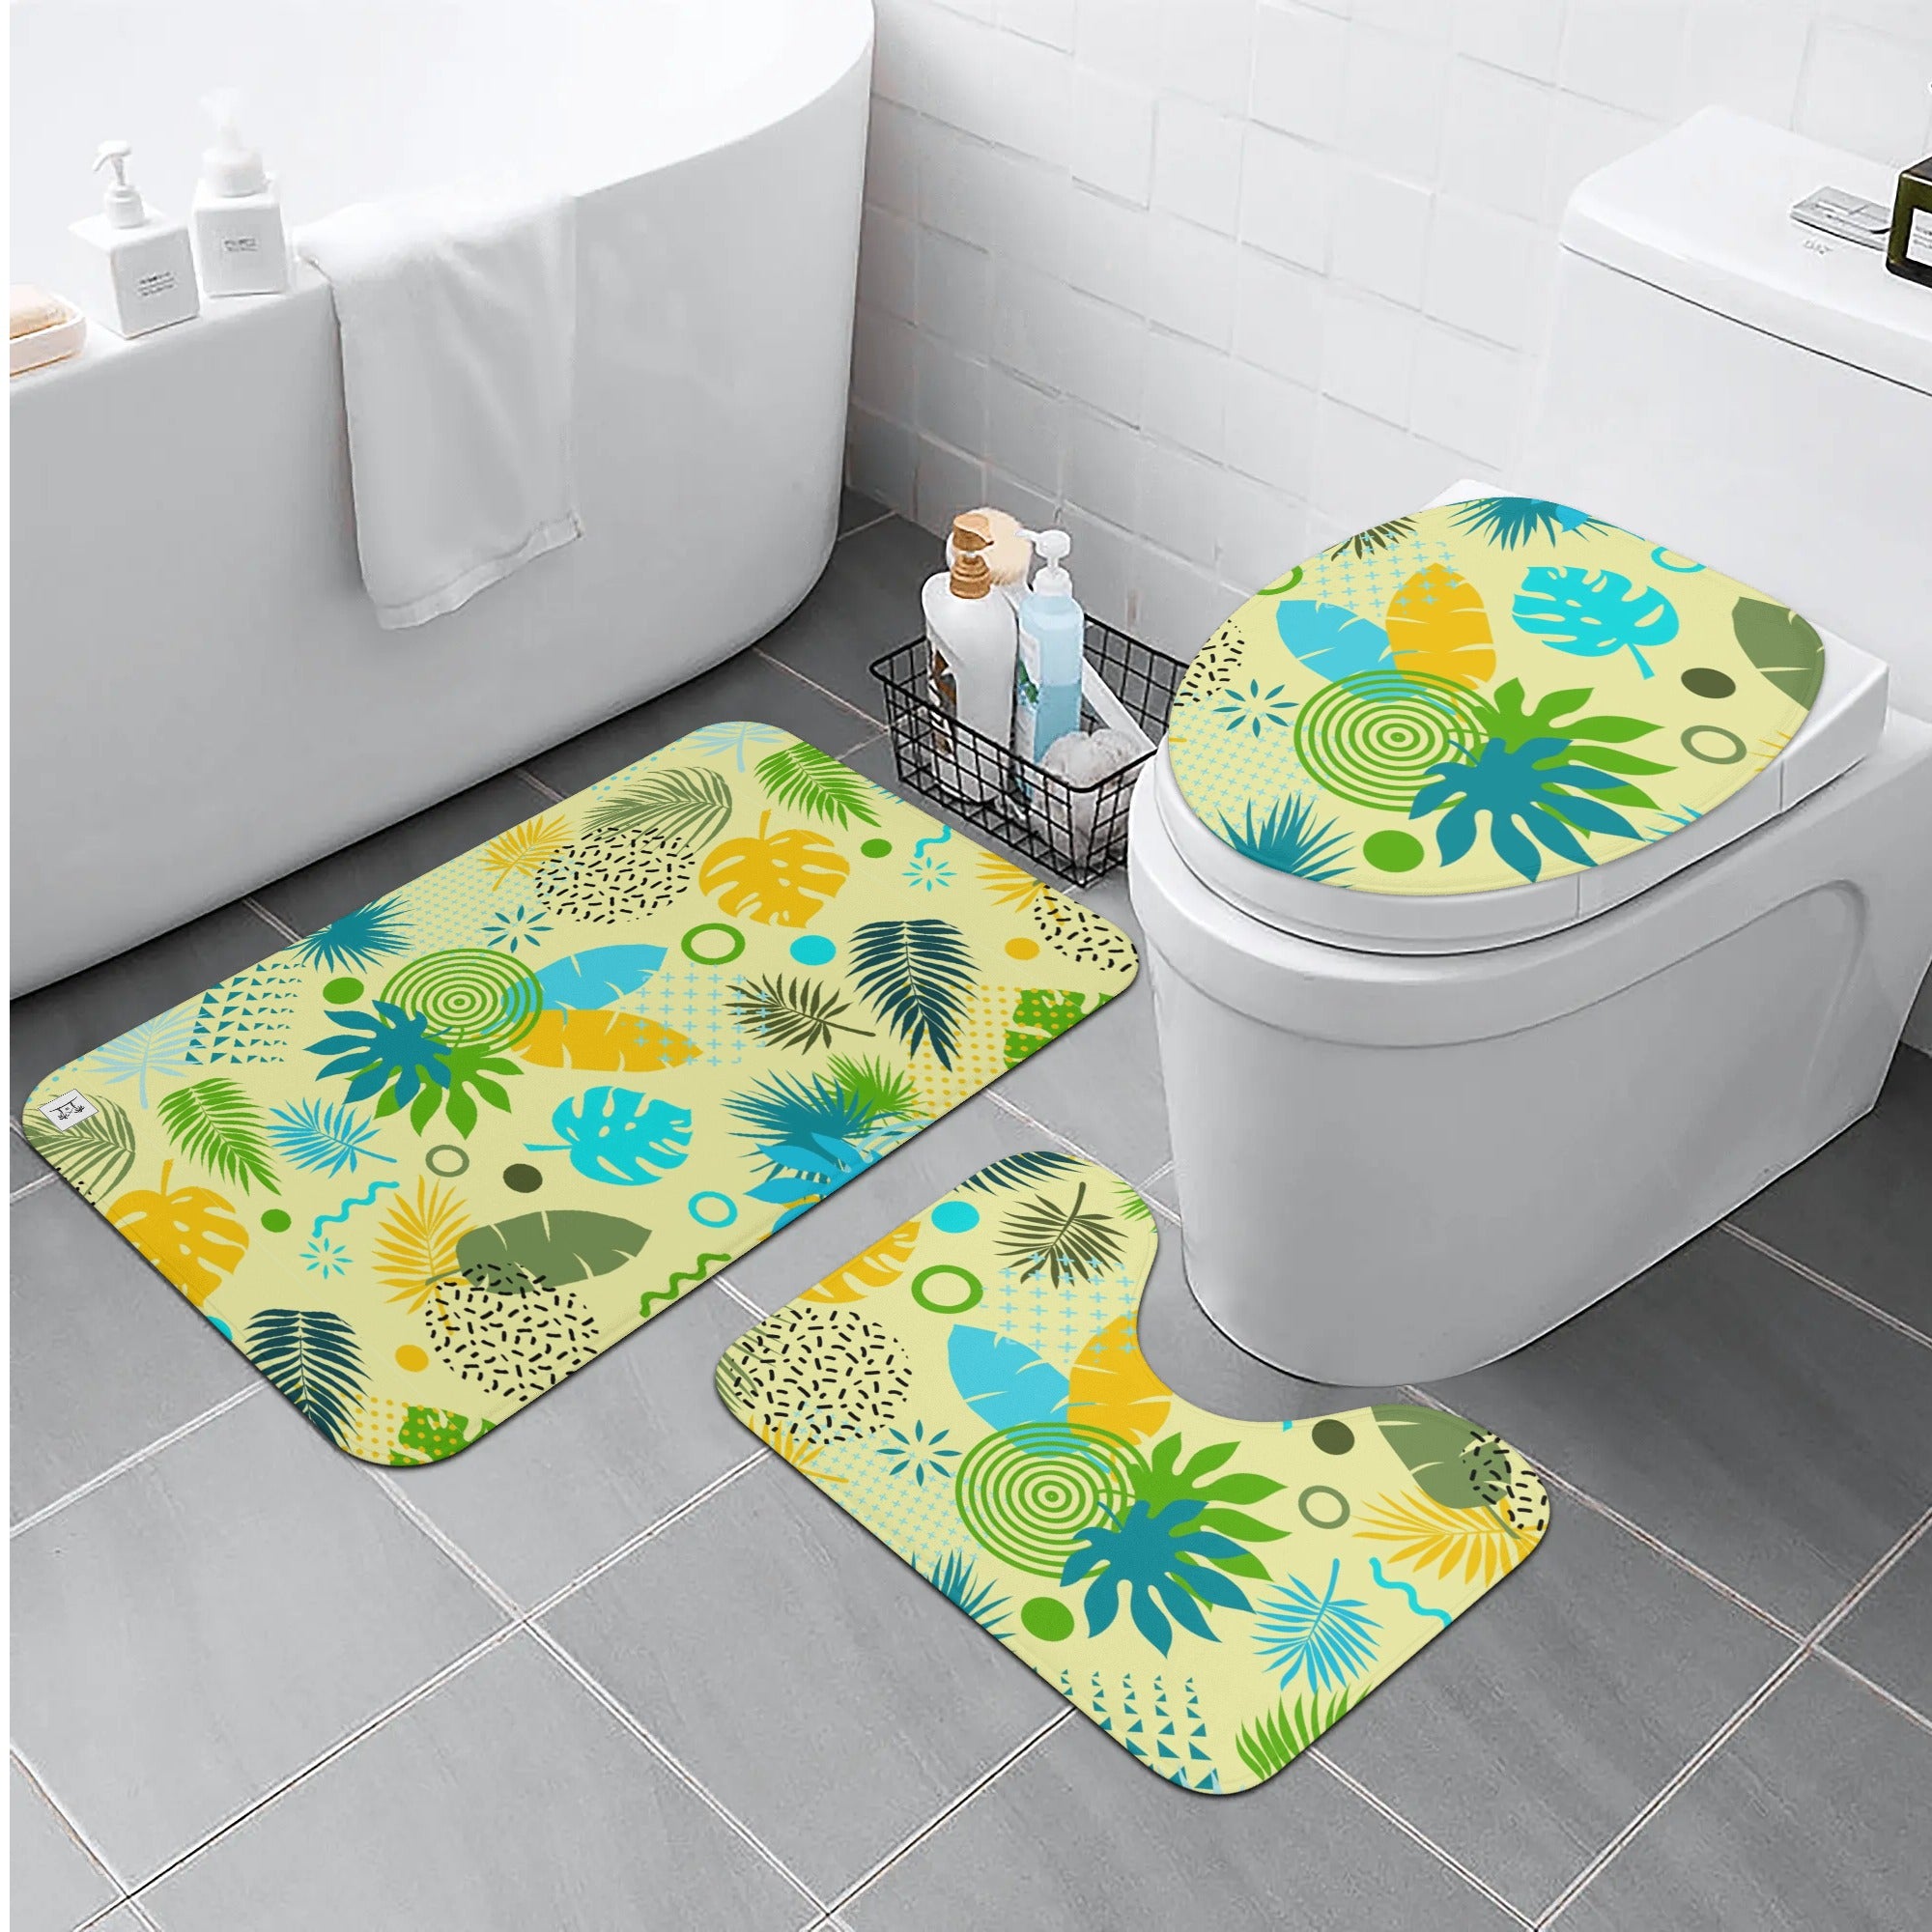 Three-Piece Bath Mat Set - Tropical Print in Lemon Lime